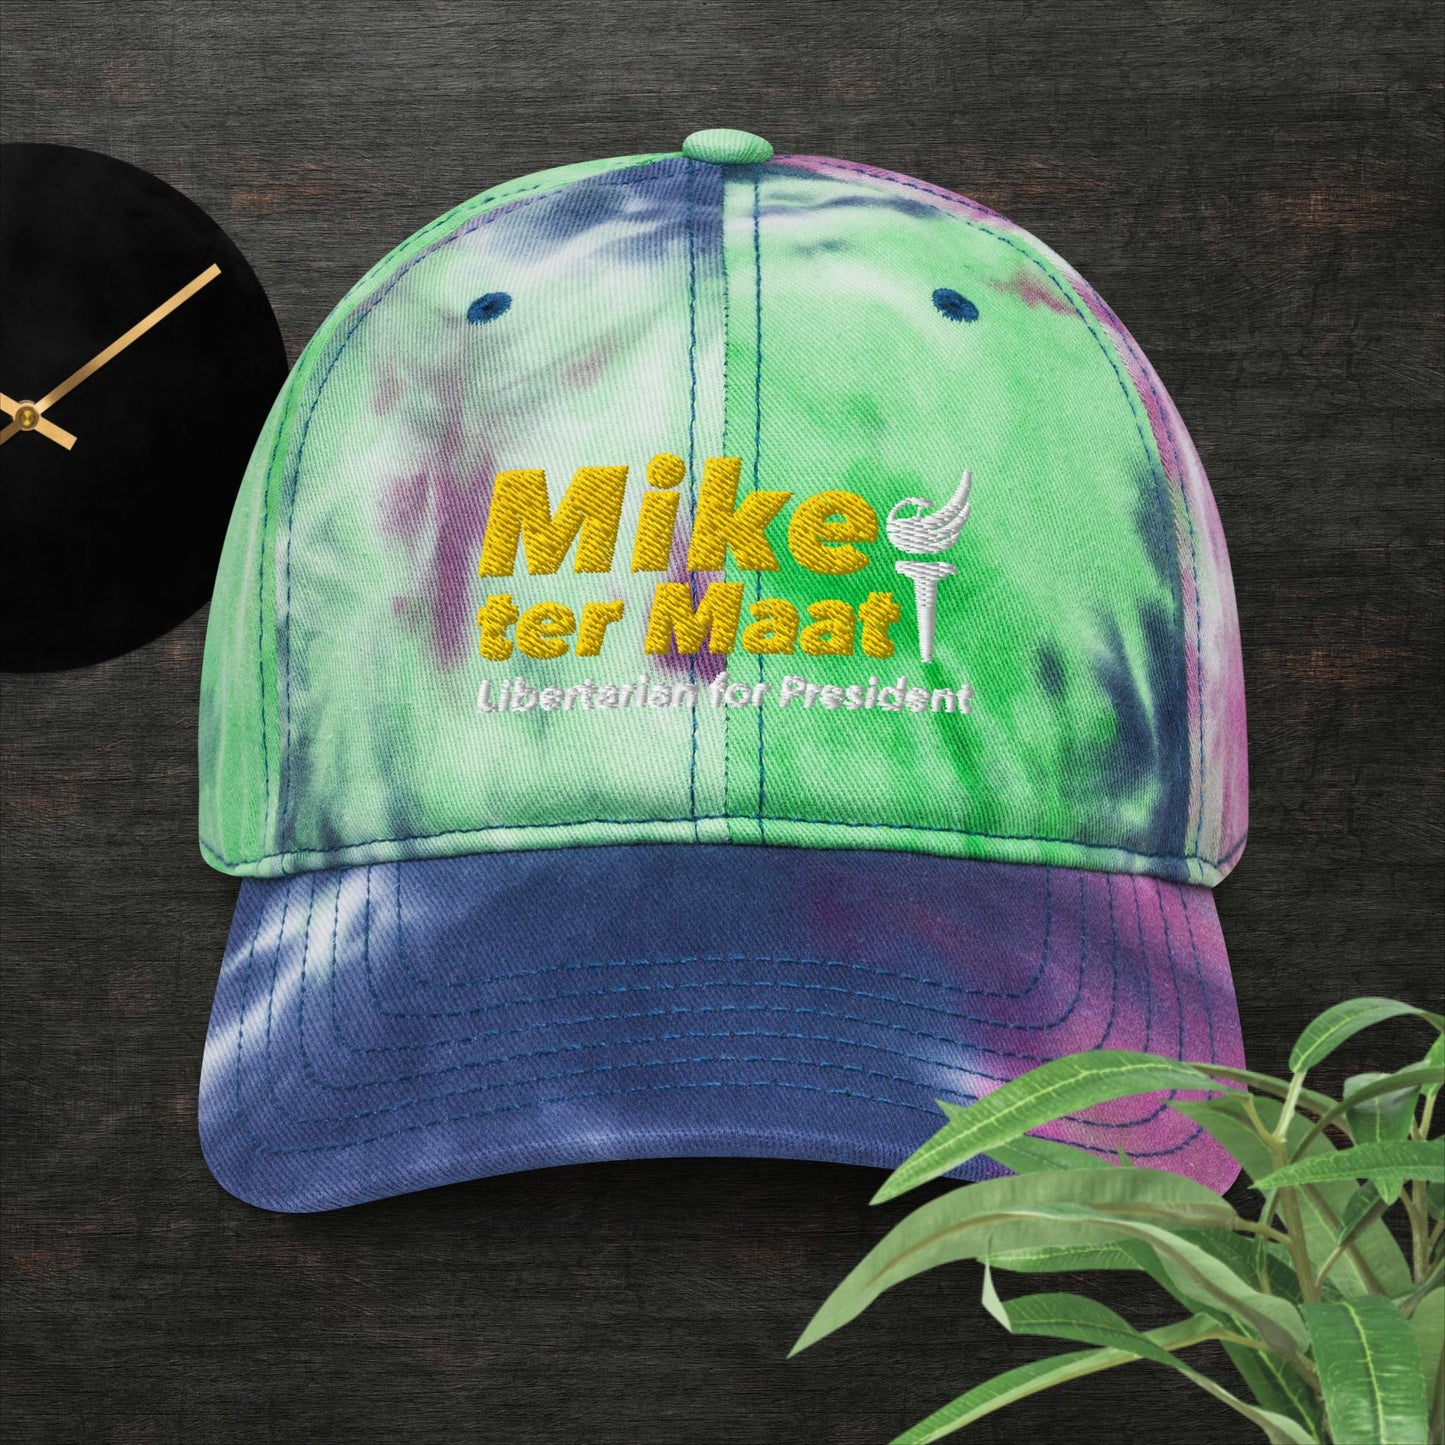 MTM for President Tie dye hat